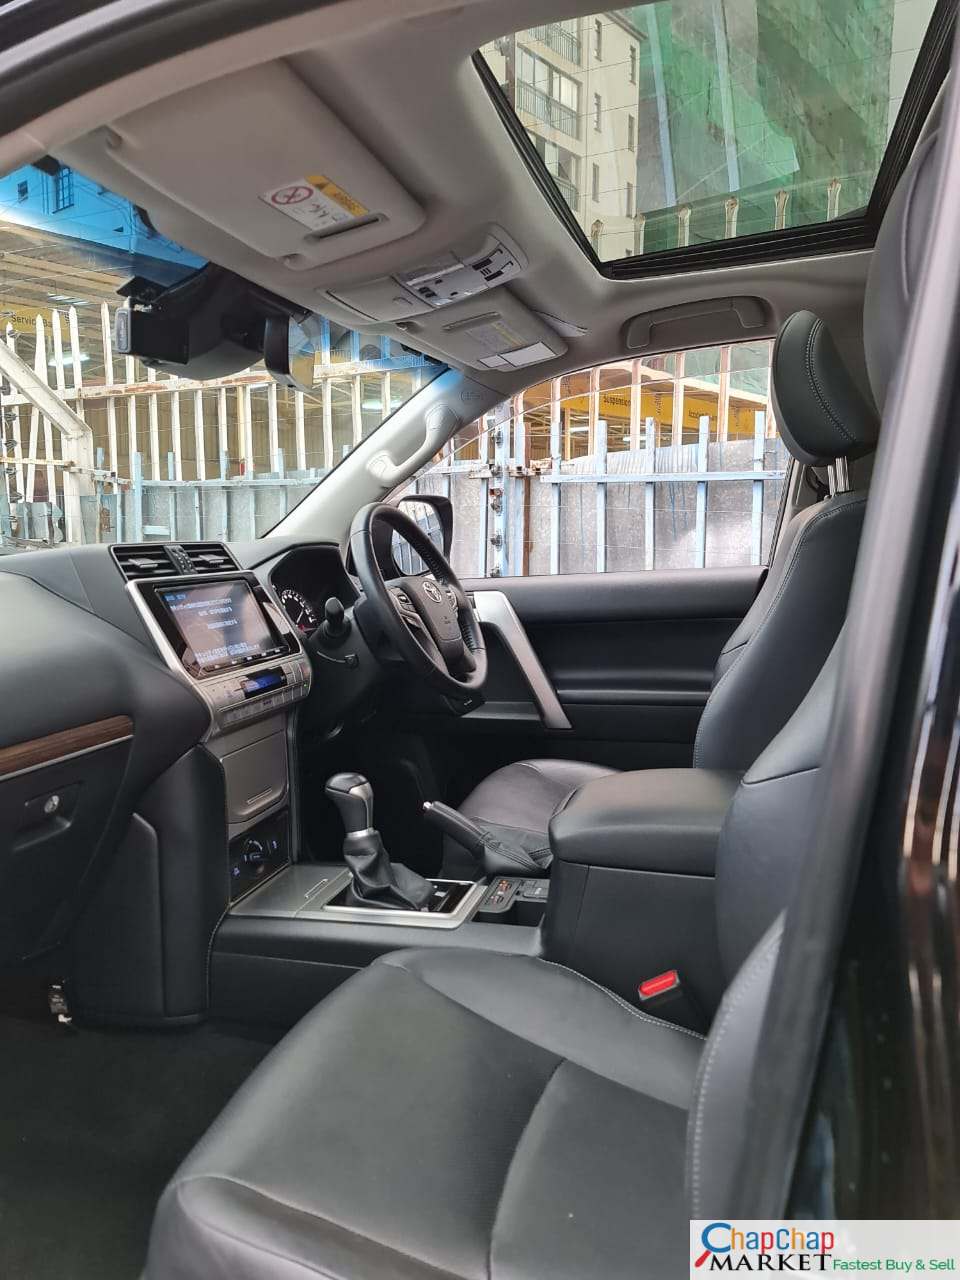 Toyota PRADO TXL 2018 Sunroof Quick SALE TRADE IN OK EXCLUSIVE!